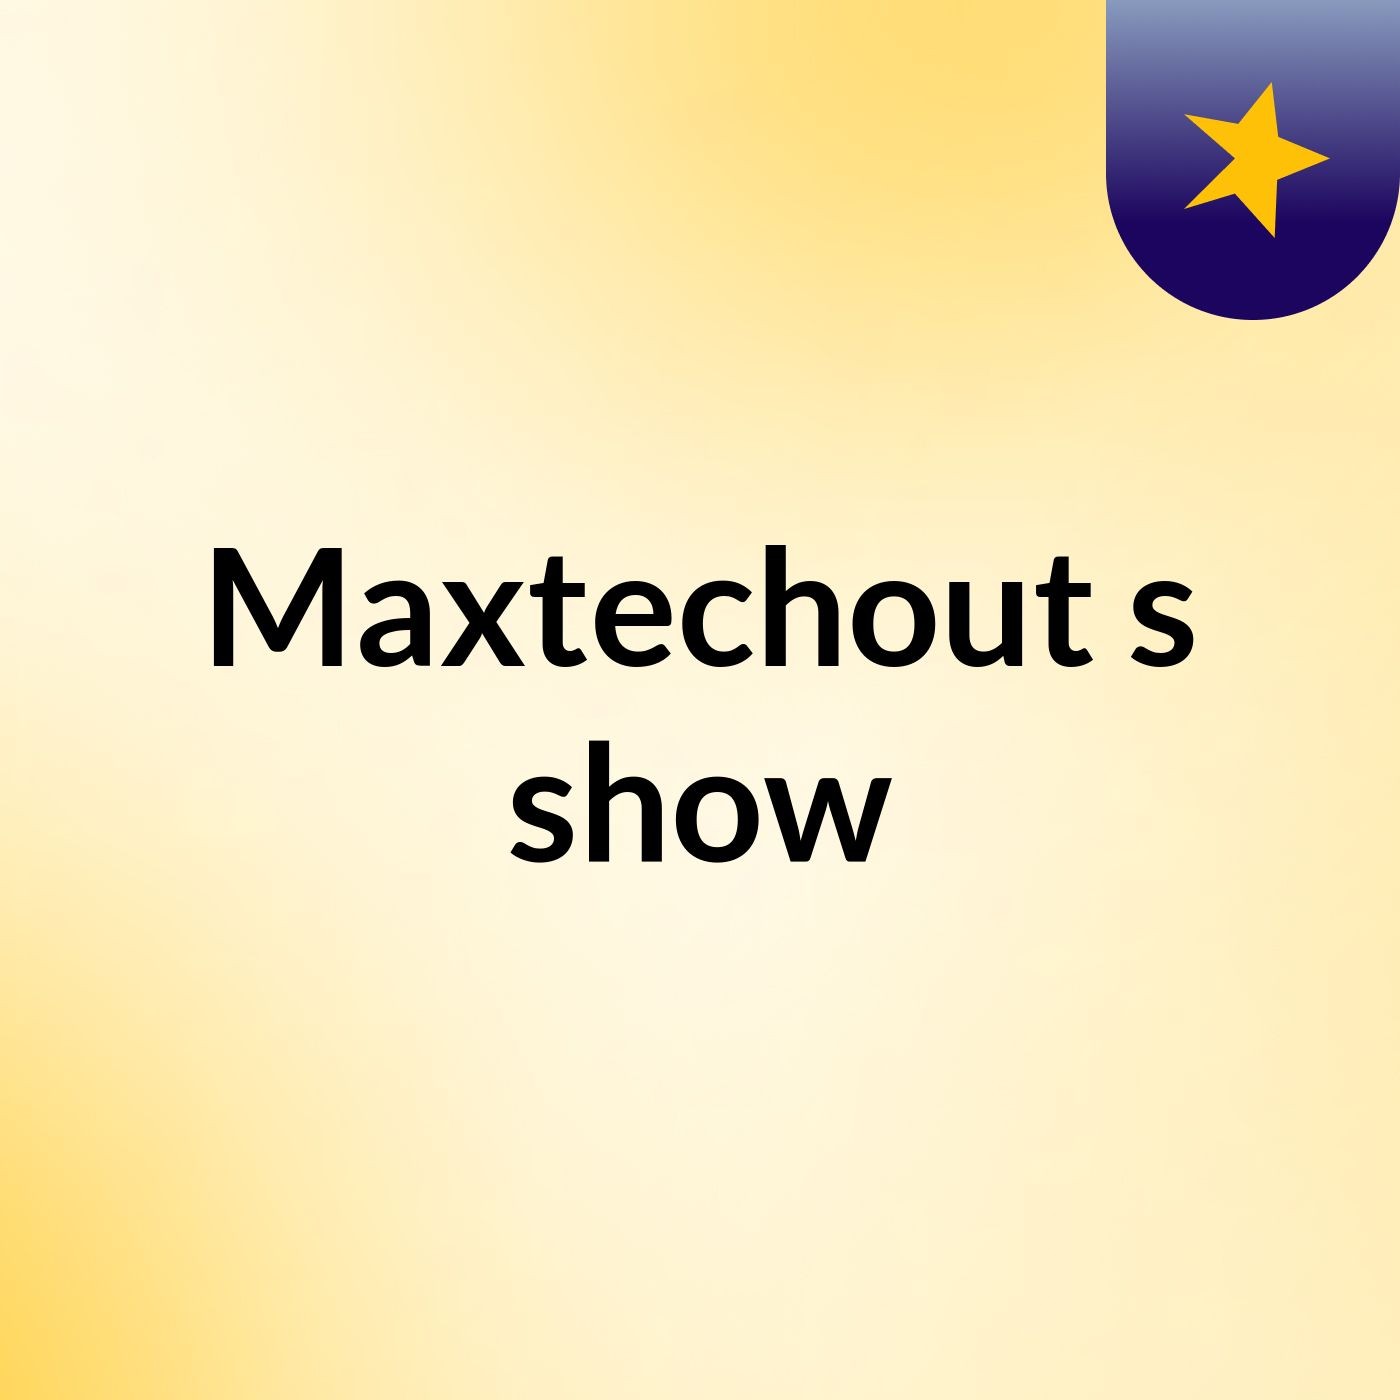 Maxtechout's show